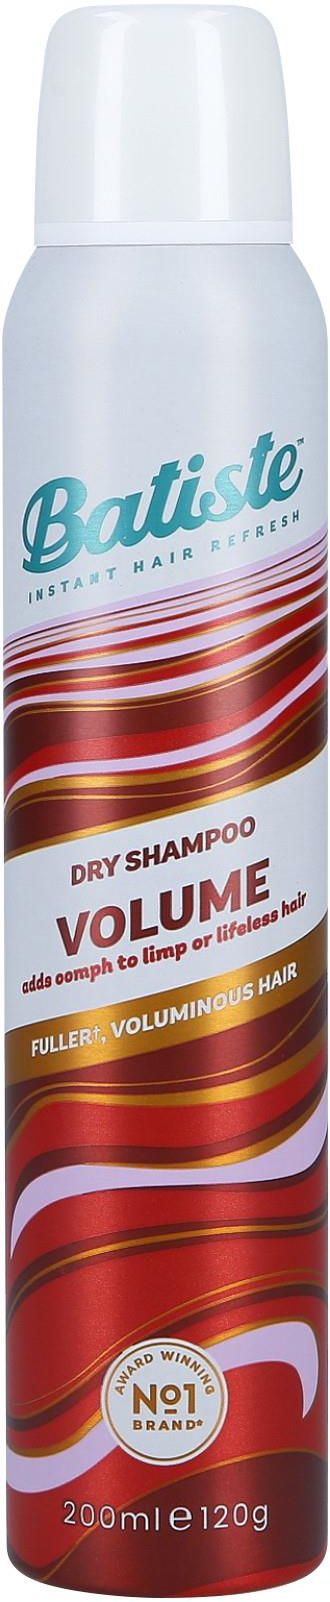 batiste szampon do włosów eolume